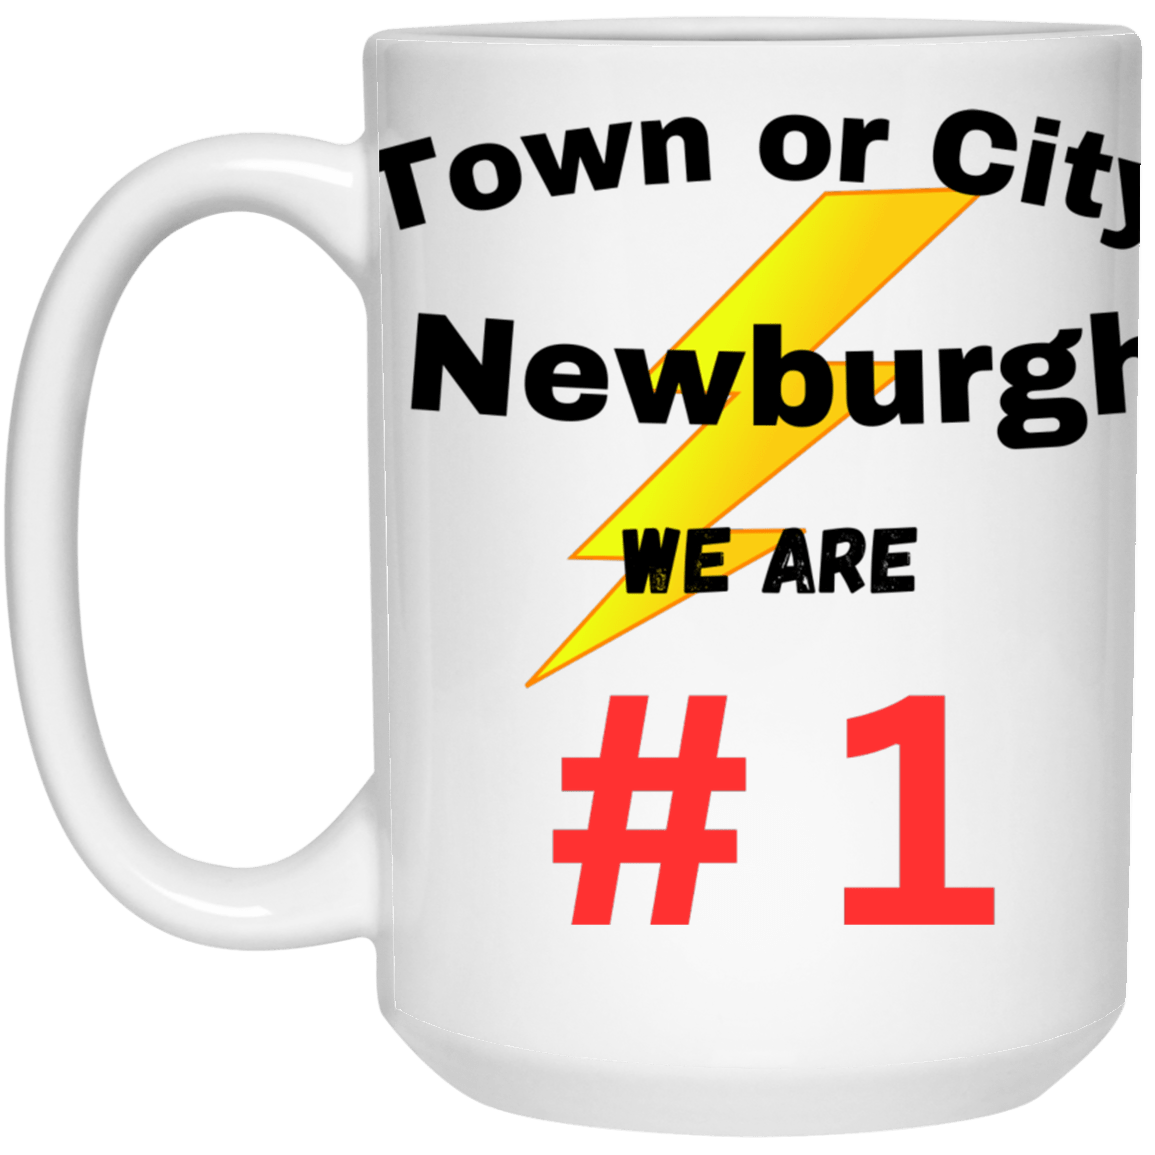 Newburgh #1 White Mug